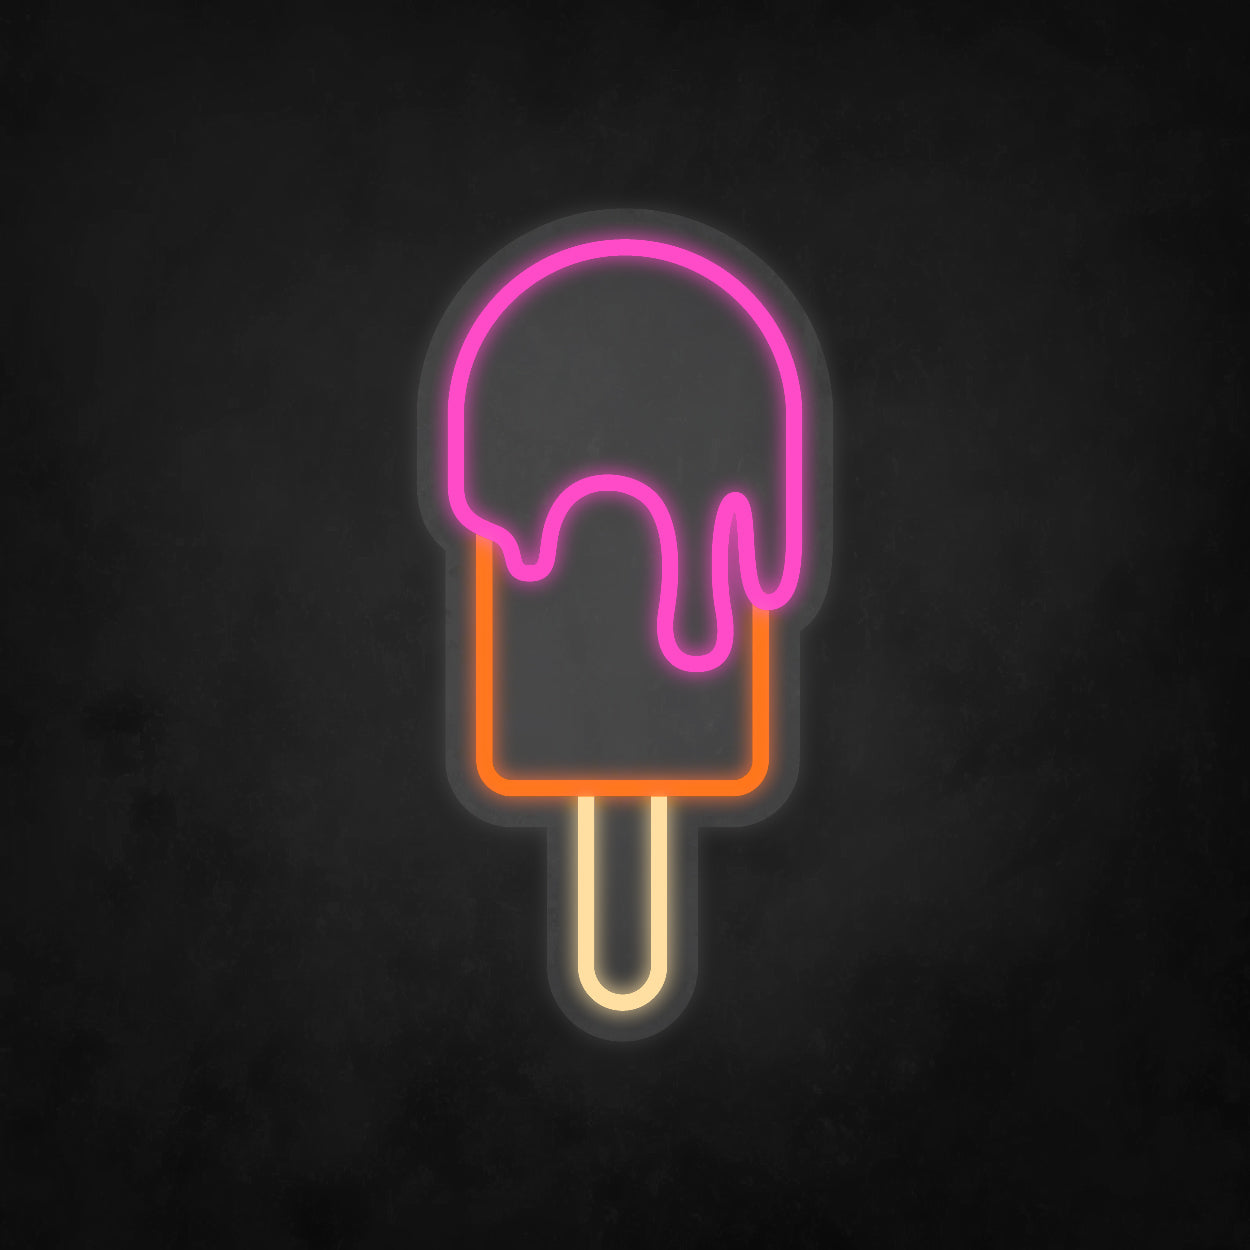 LED Neon Sign - Ice Cream - Stick